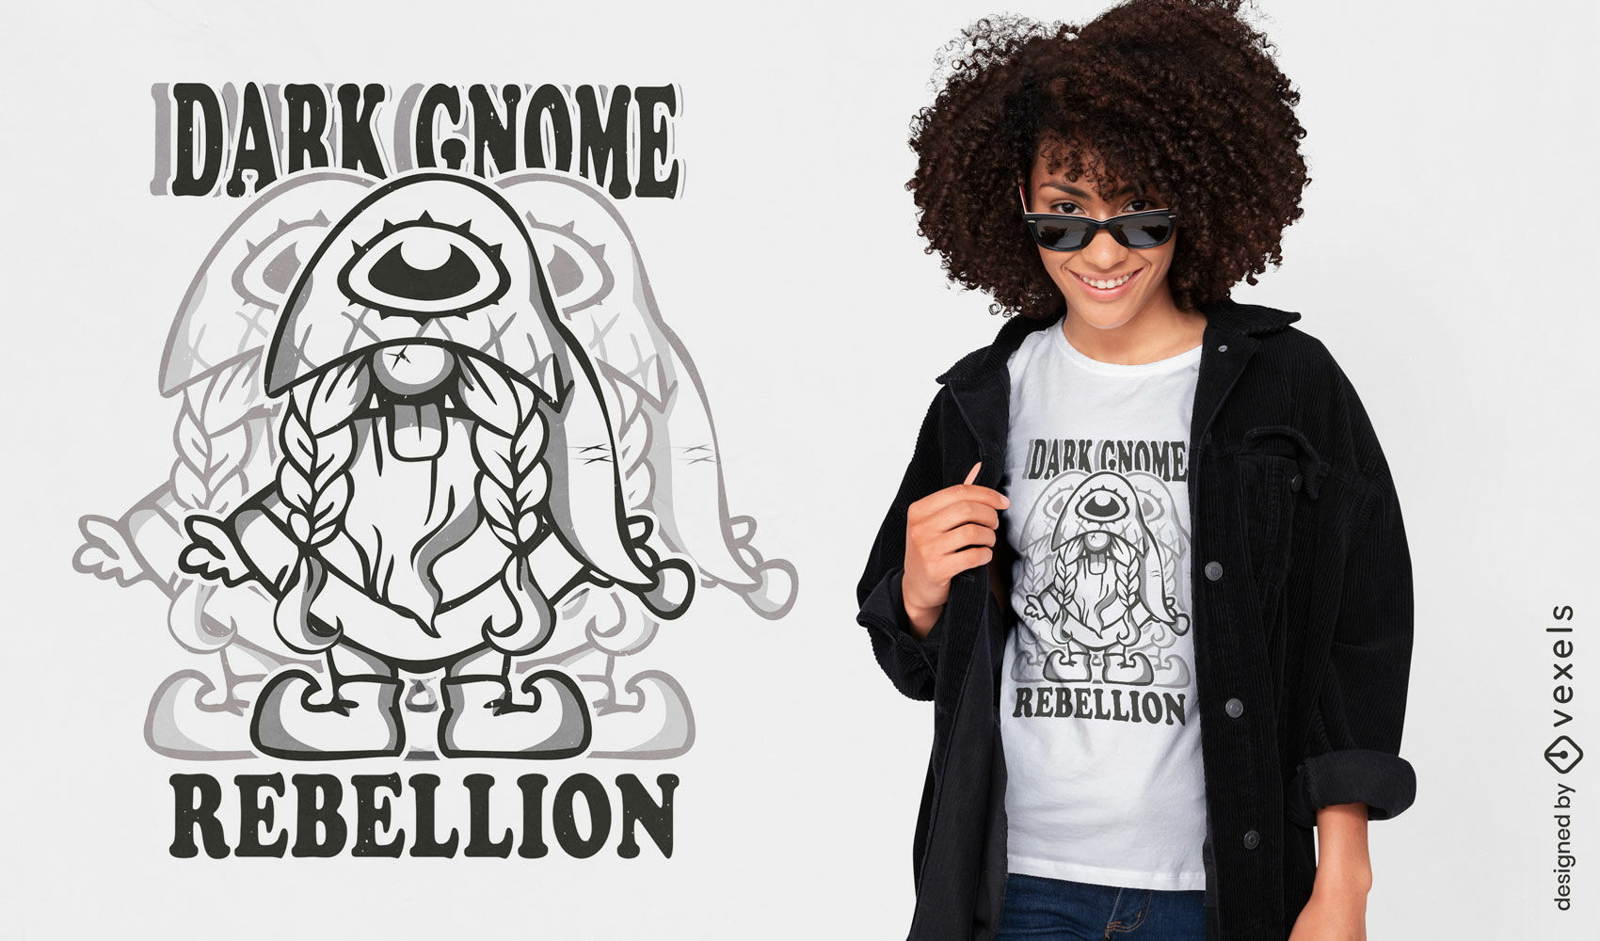 Dark gnome rebellion t-shirt design